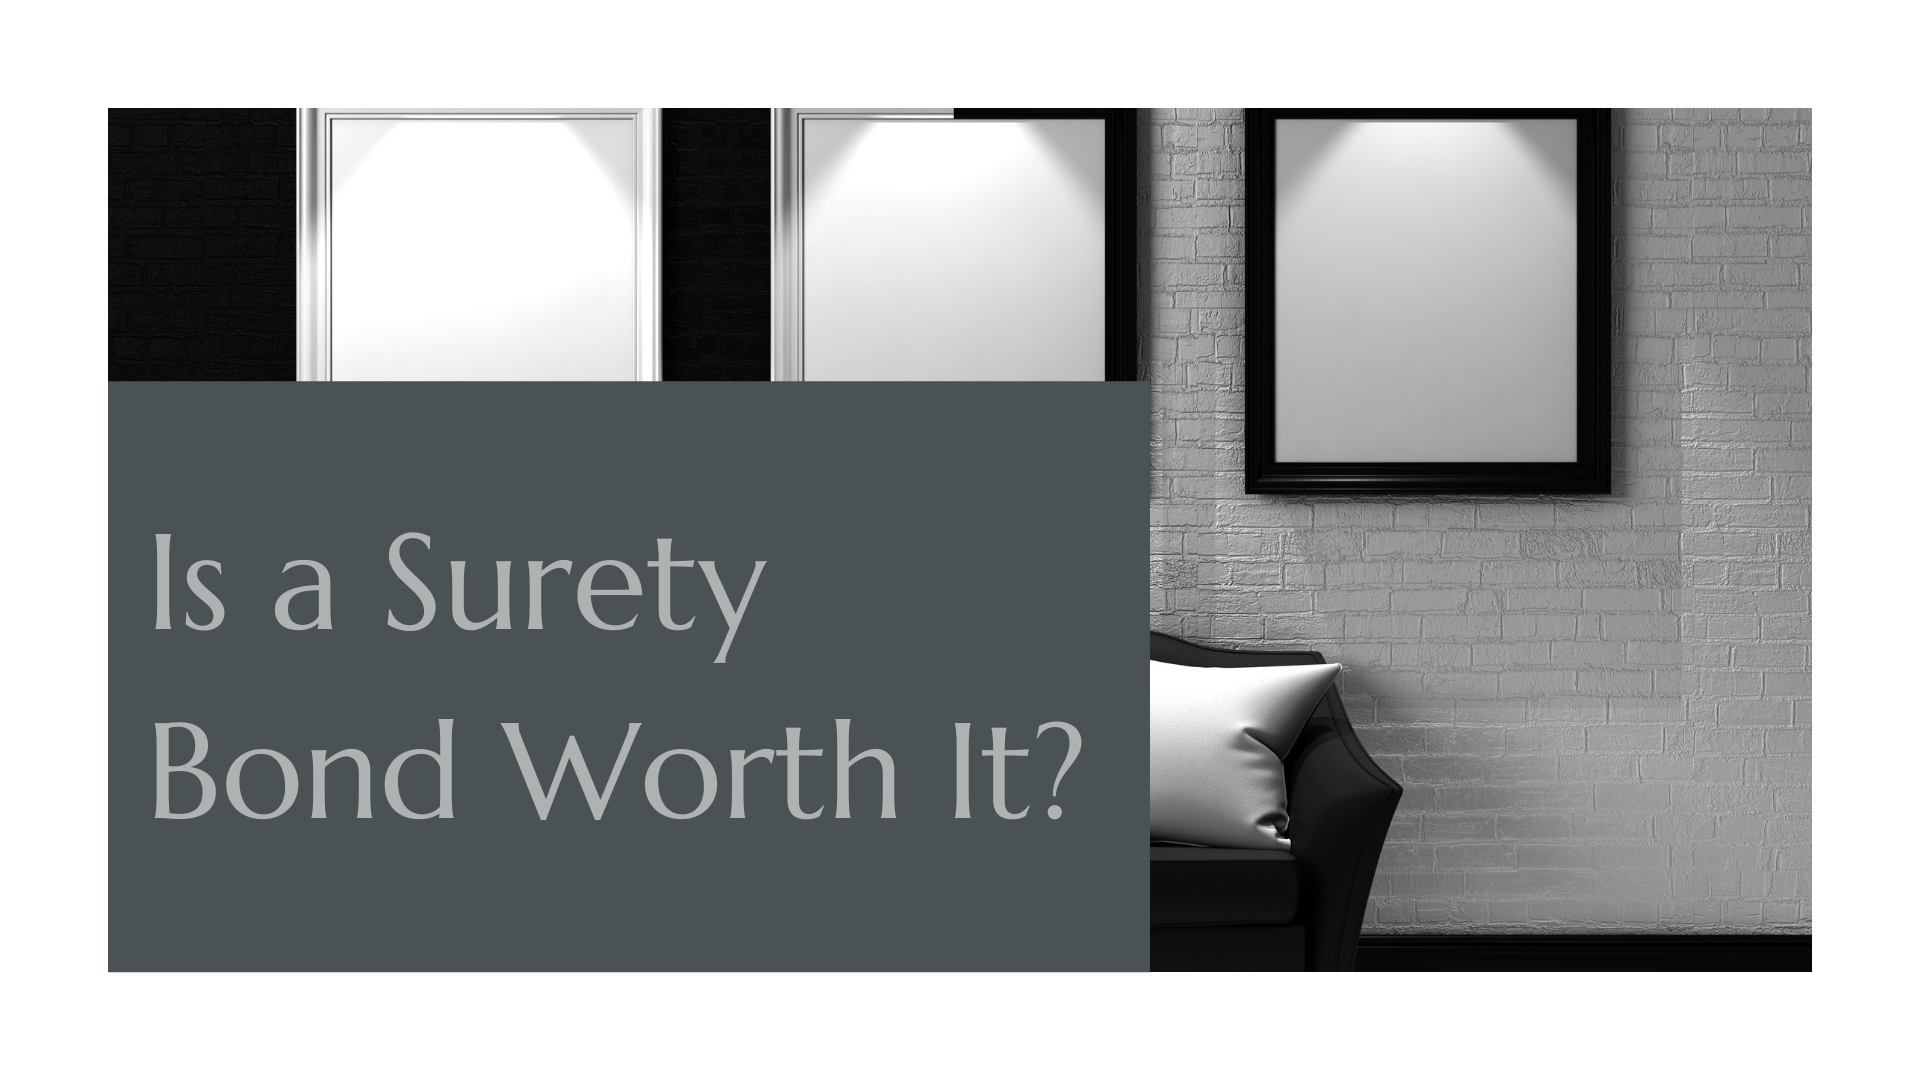 surety bond - Is obtaining a surety bond worthwhile - black and white wall photo